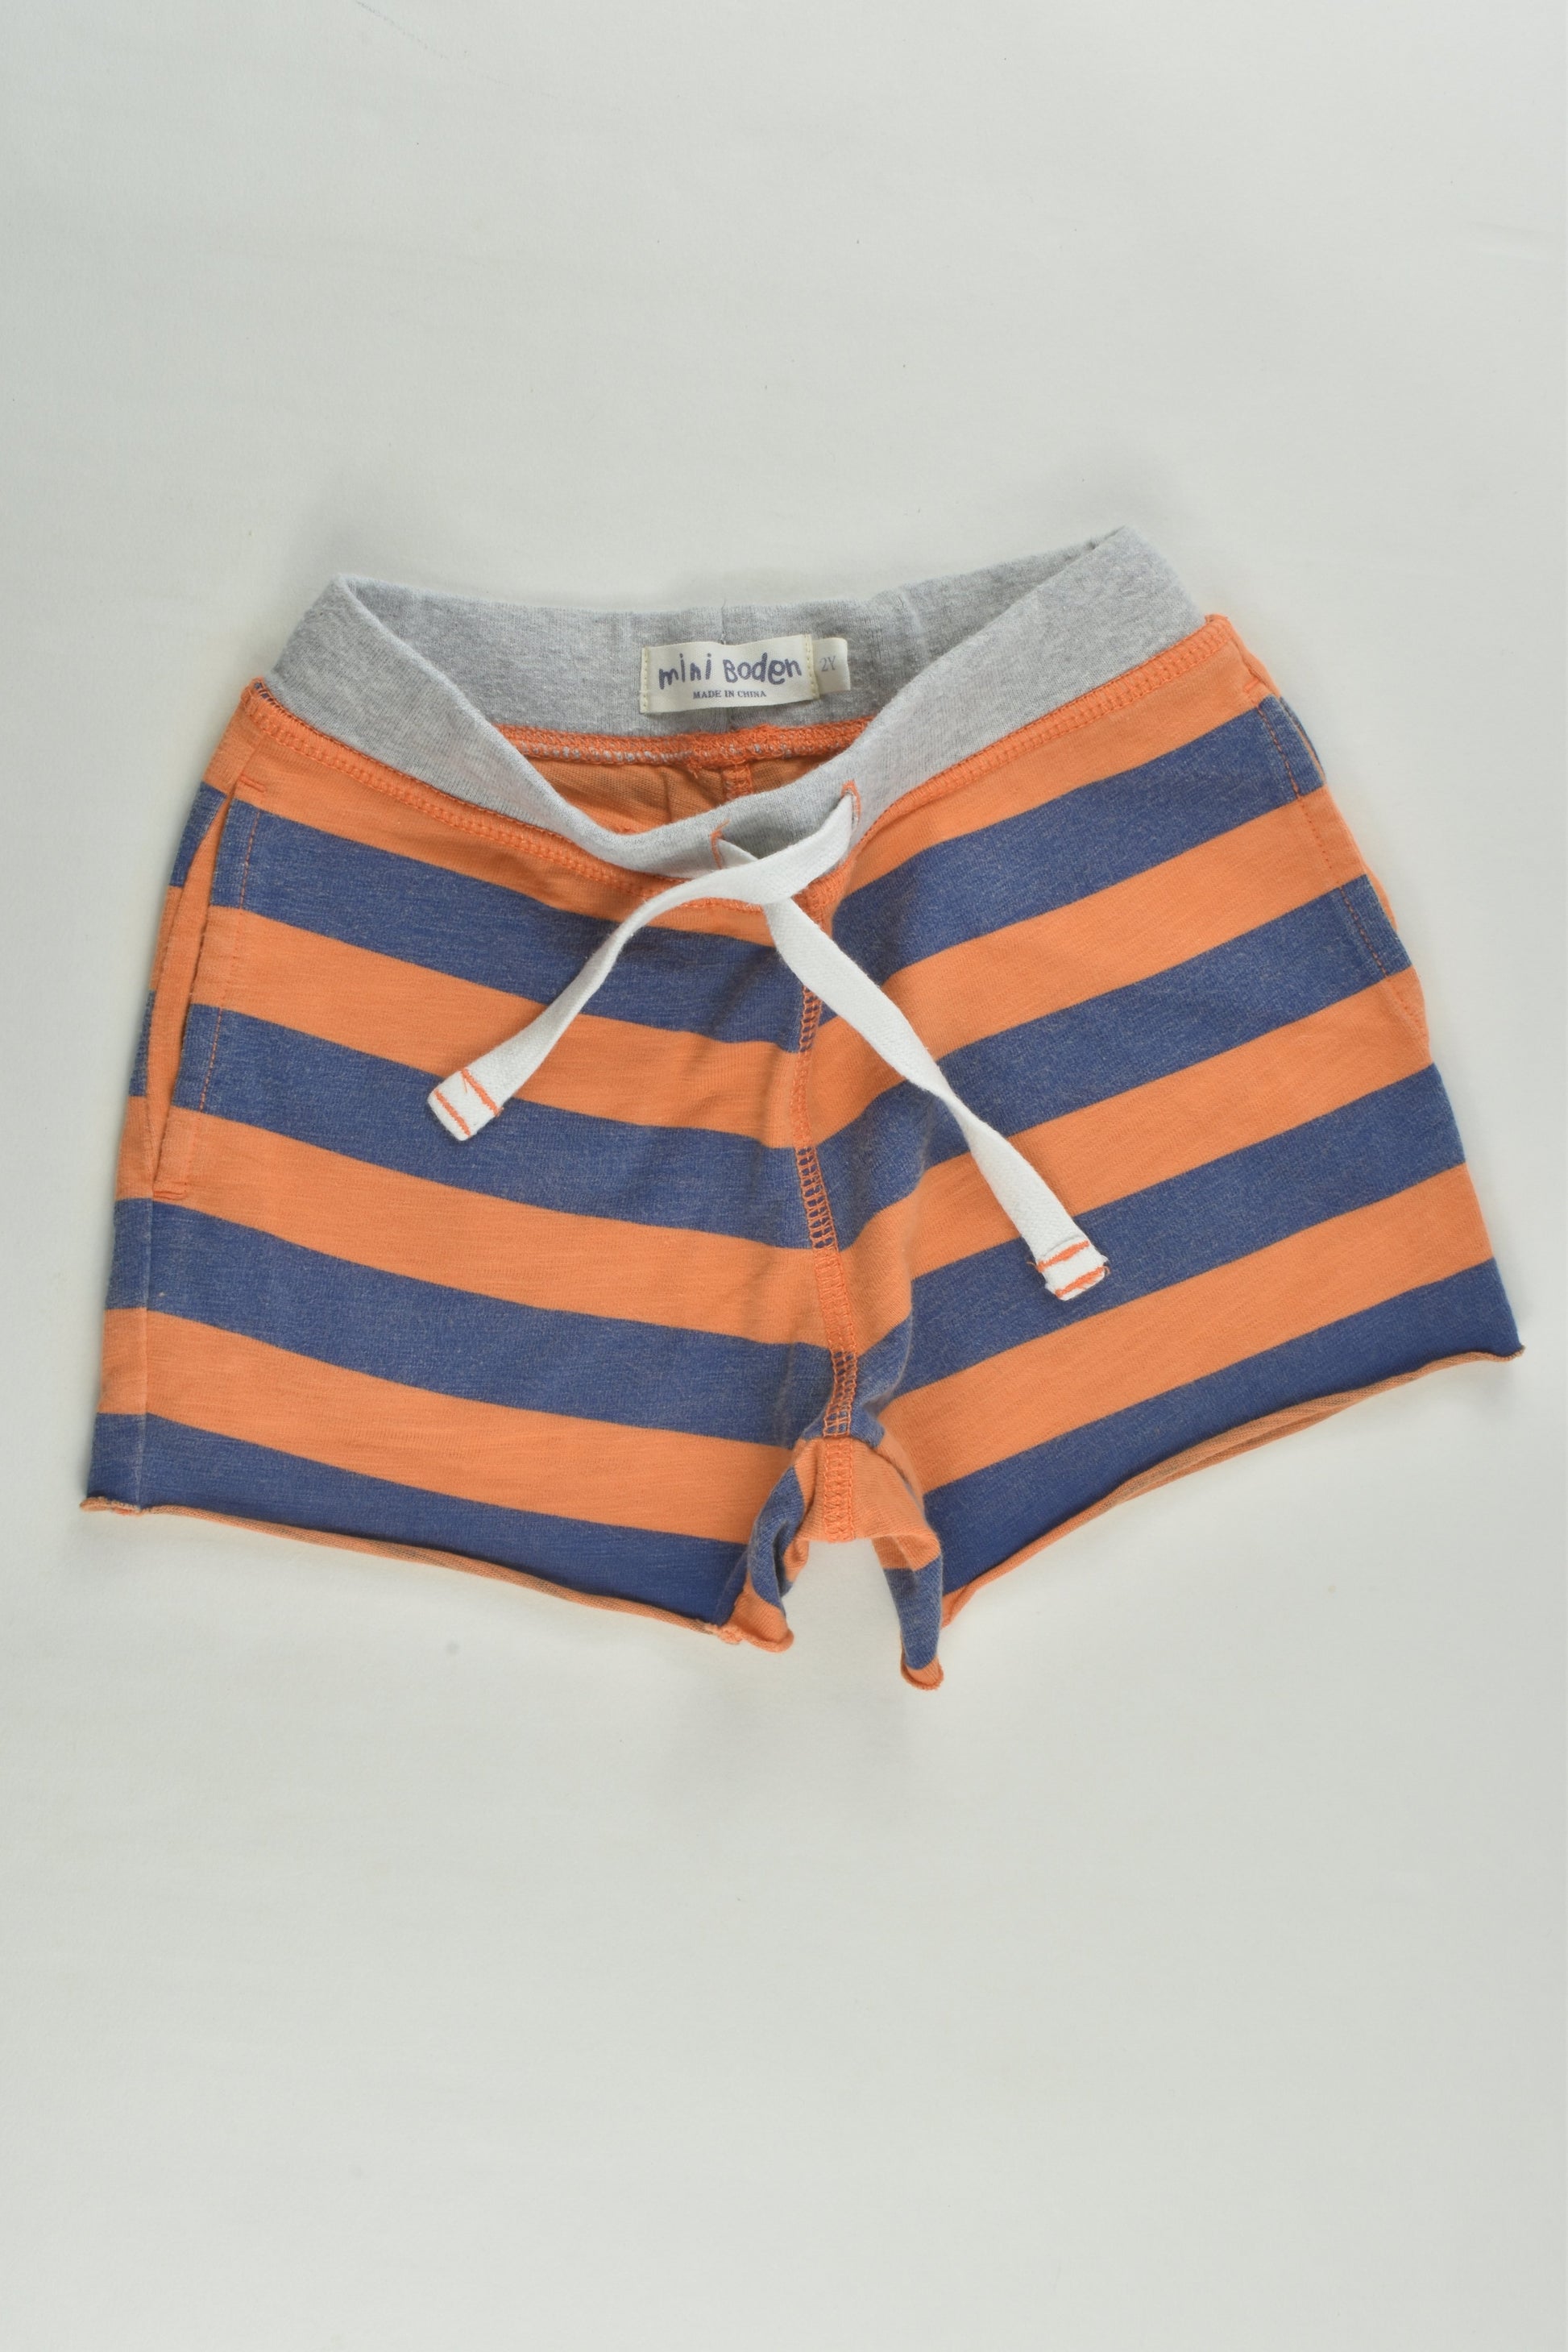 Mini Boden Size 2 Lightweight Orange Stripes Shorts